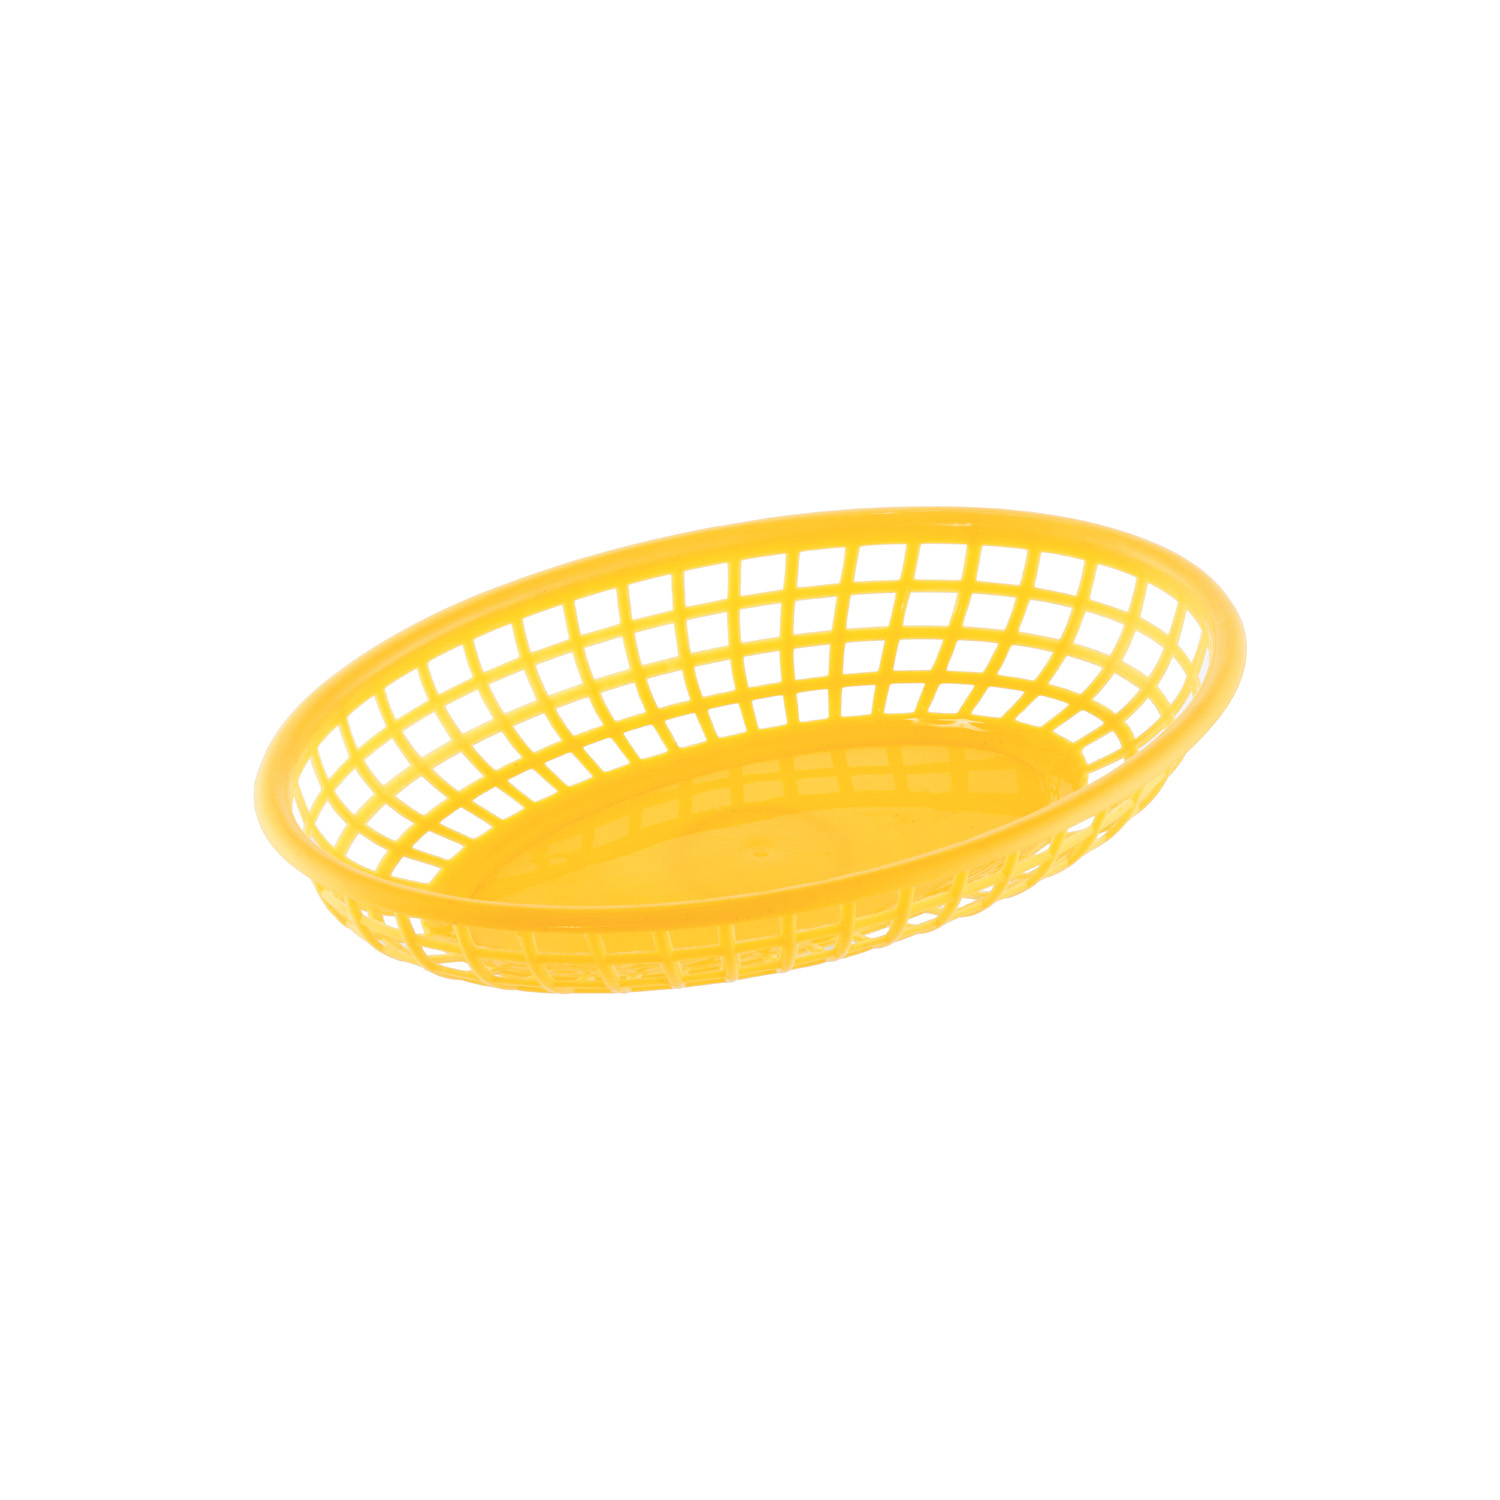 CAC China TTFB-09YL Yellow Plastic Oval Fast Food Basket 9 1/4" L - 1 dozen